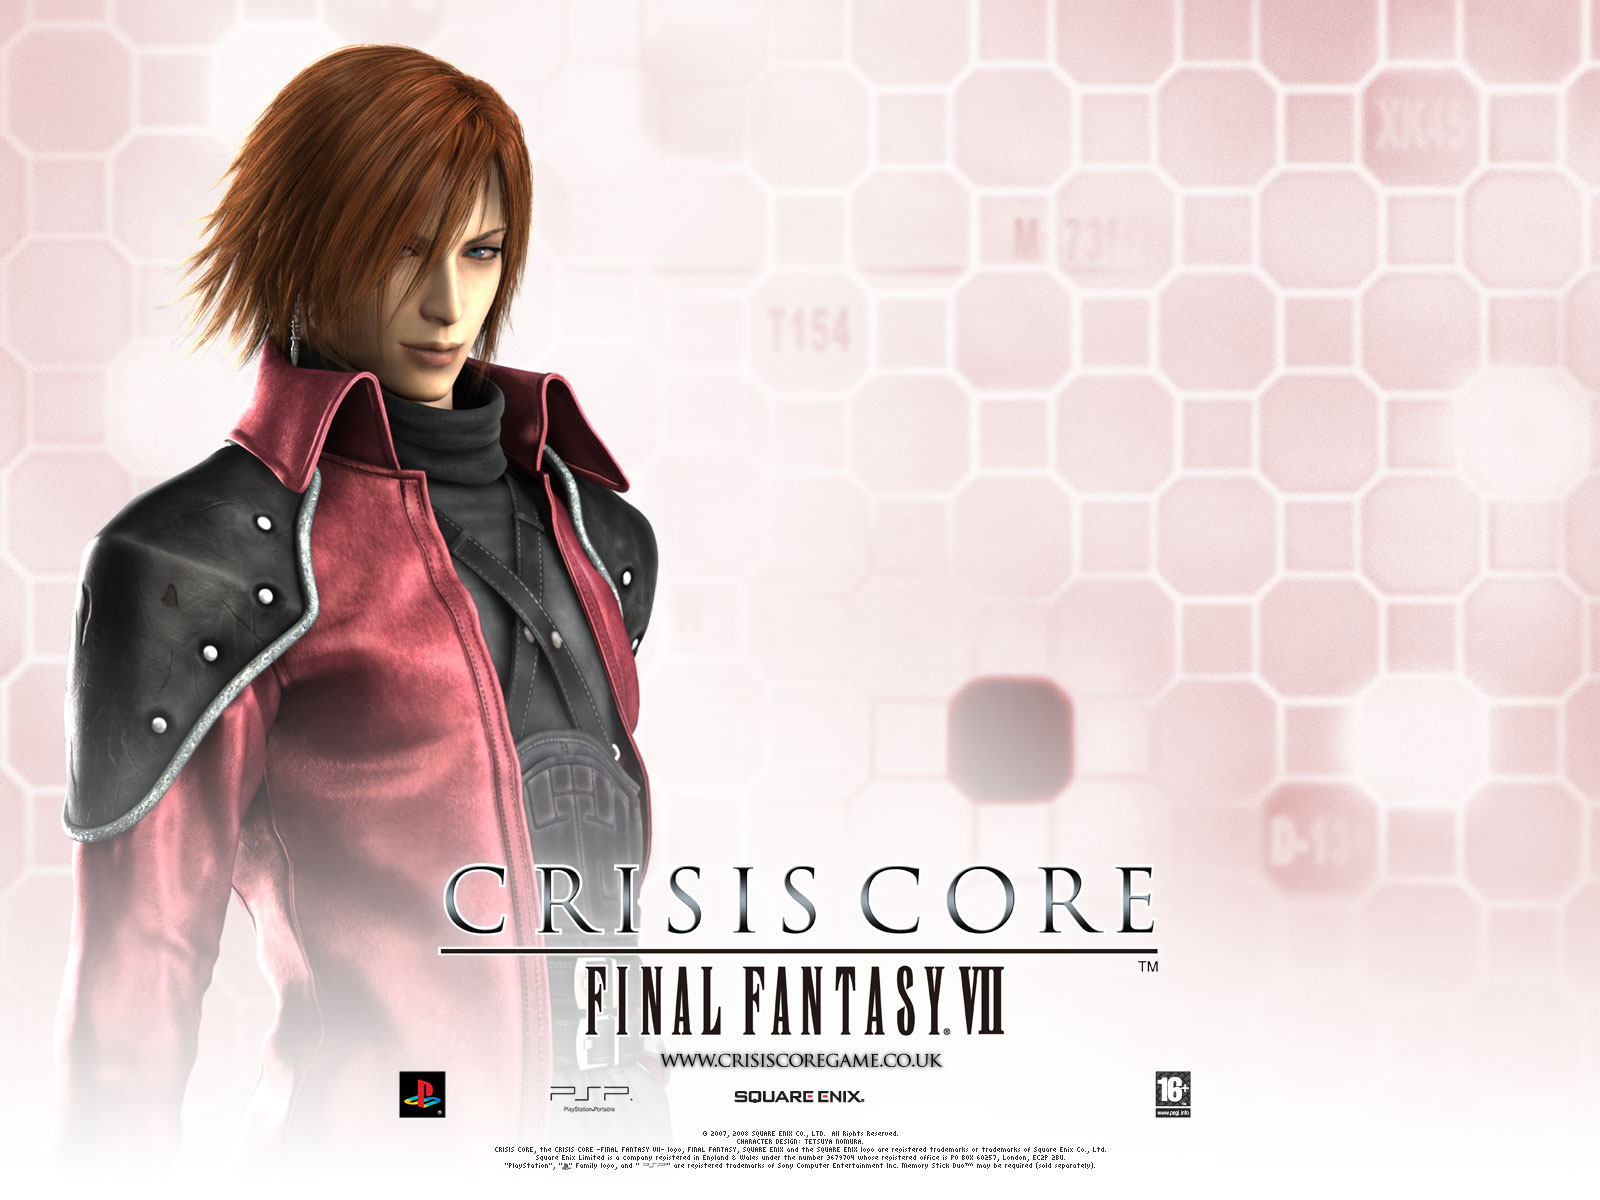 Fotos von Final Fantasy Final Fantasy VII: Crisis Core computerspiel Spiele